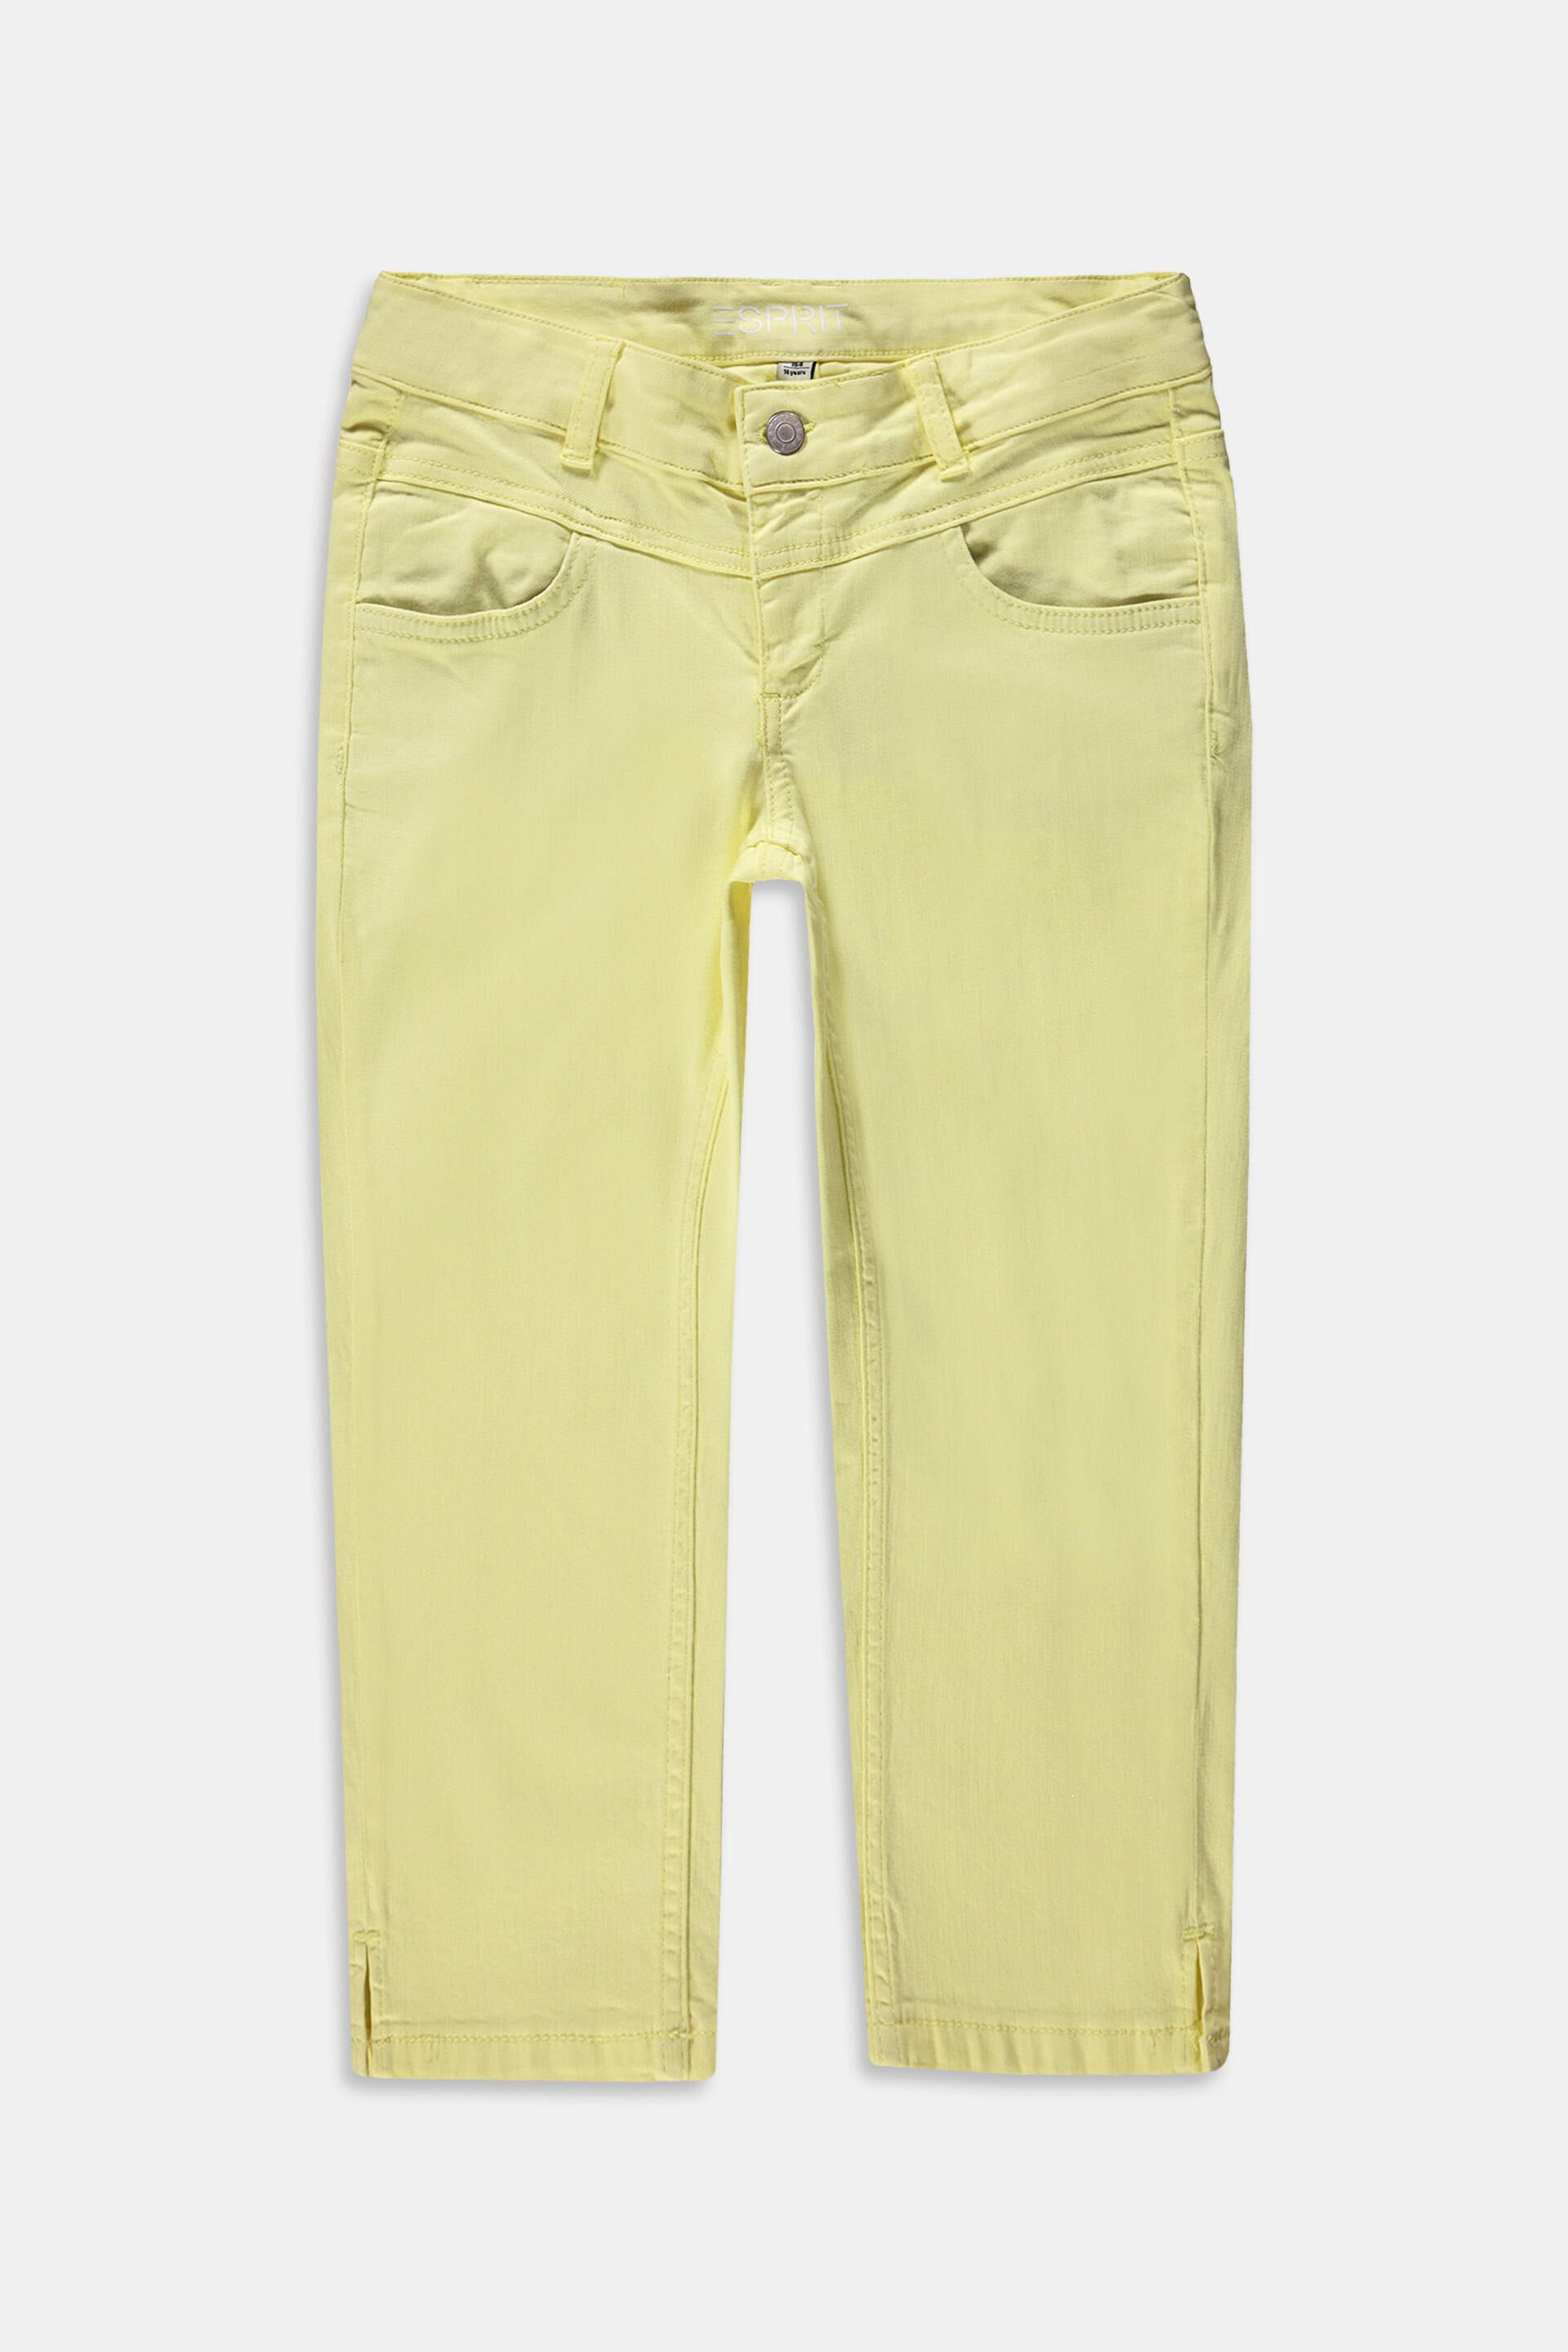 Buy Black  Yellow Trousers  Pants for Women by INDIWEAVES Online   Ajiocom